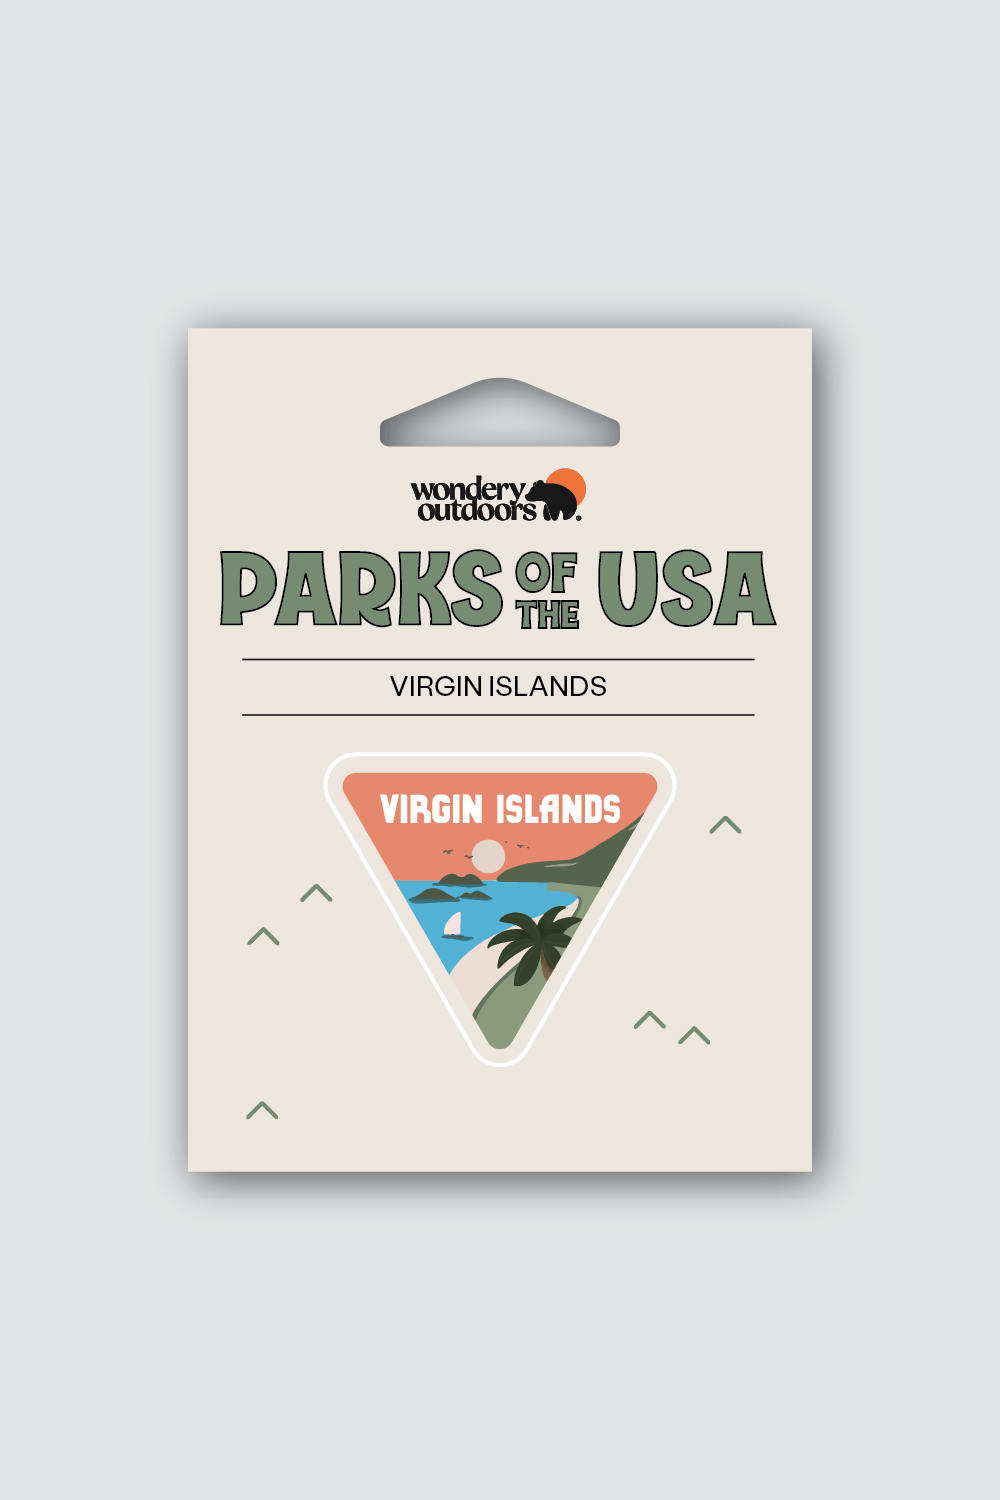 #national park_virgin islands _USA National Parks souvenir sticker gift sets